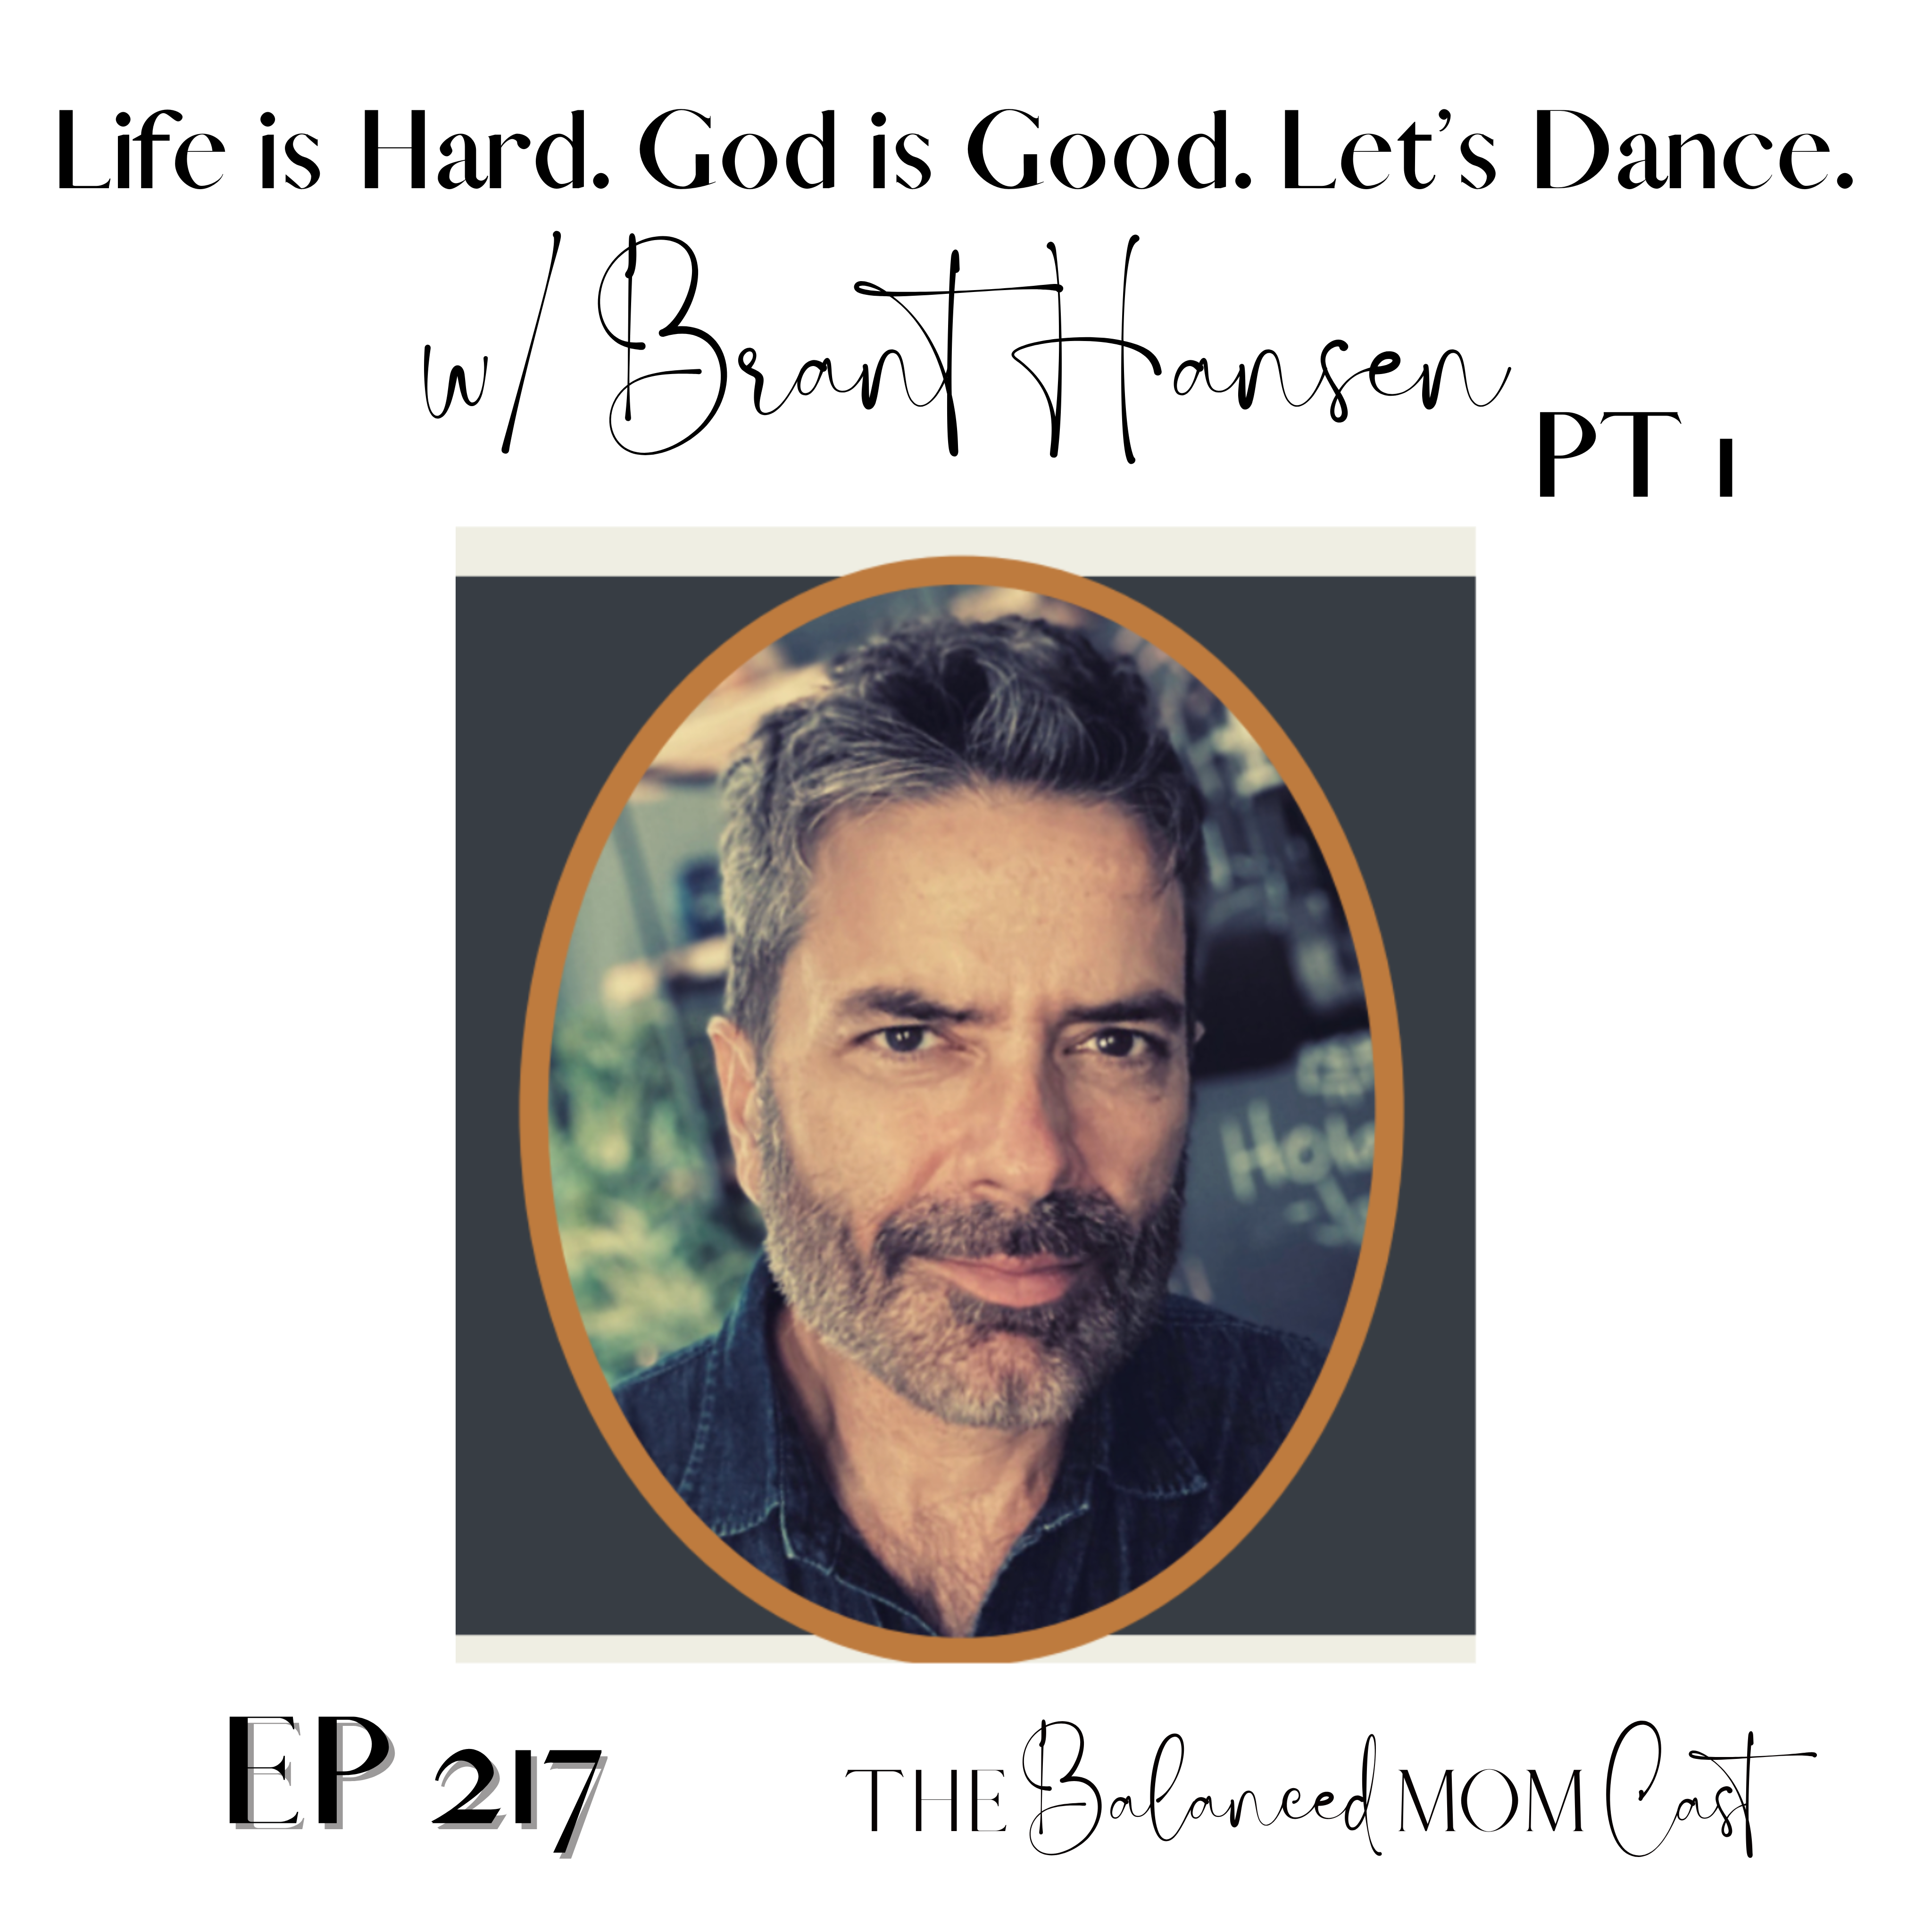 Ep 217: Life is Hard. God is Good. Let’s Dance. w/Brant Hansen, Part 1